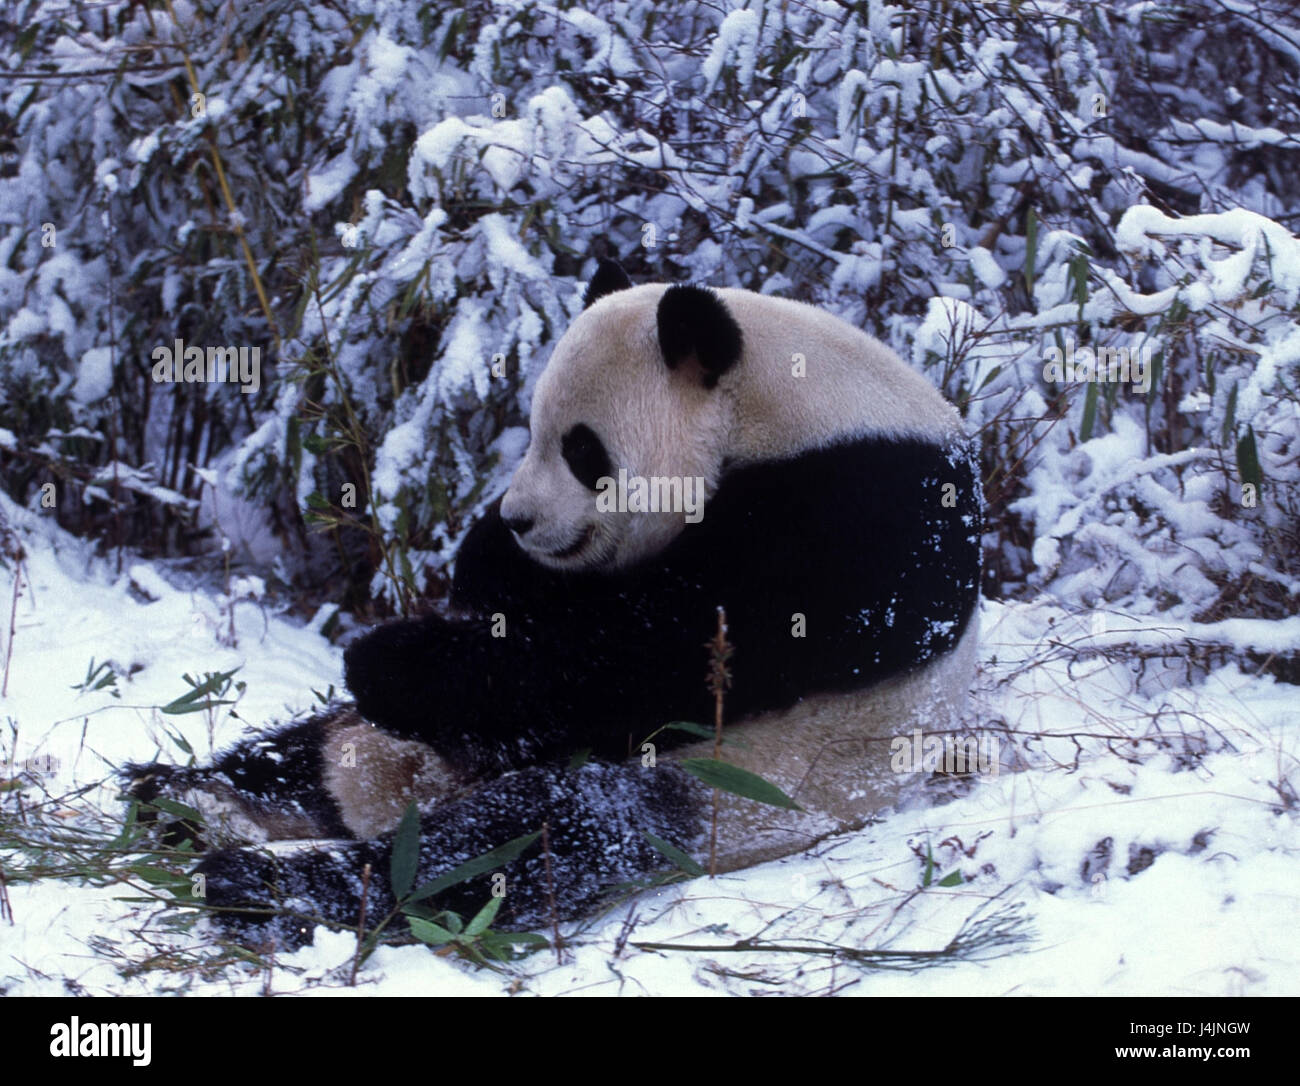 Legno, big panda, Ailuropoda melanoleuca, sedersi e mangiare la neve, ingestione panda, orso panda gigante, panda, mammifero, inverno, paesaggio invernale, Foto Stock